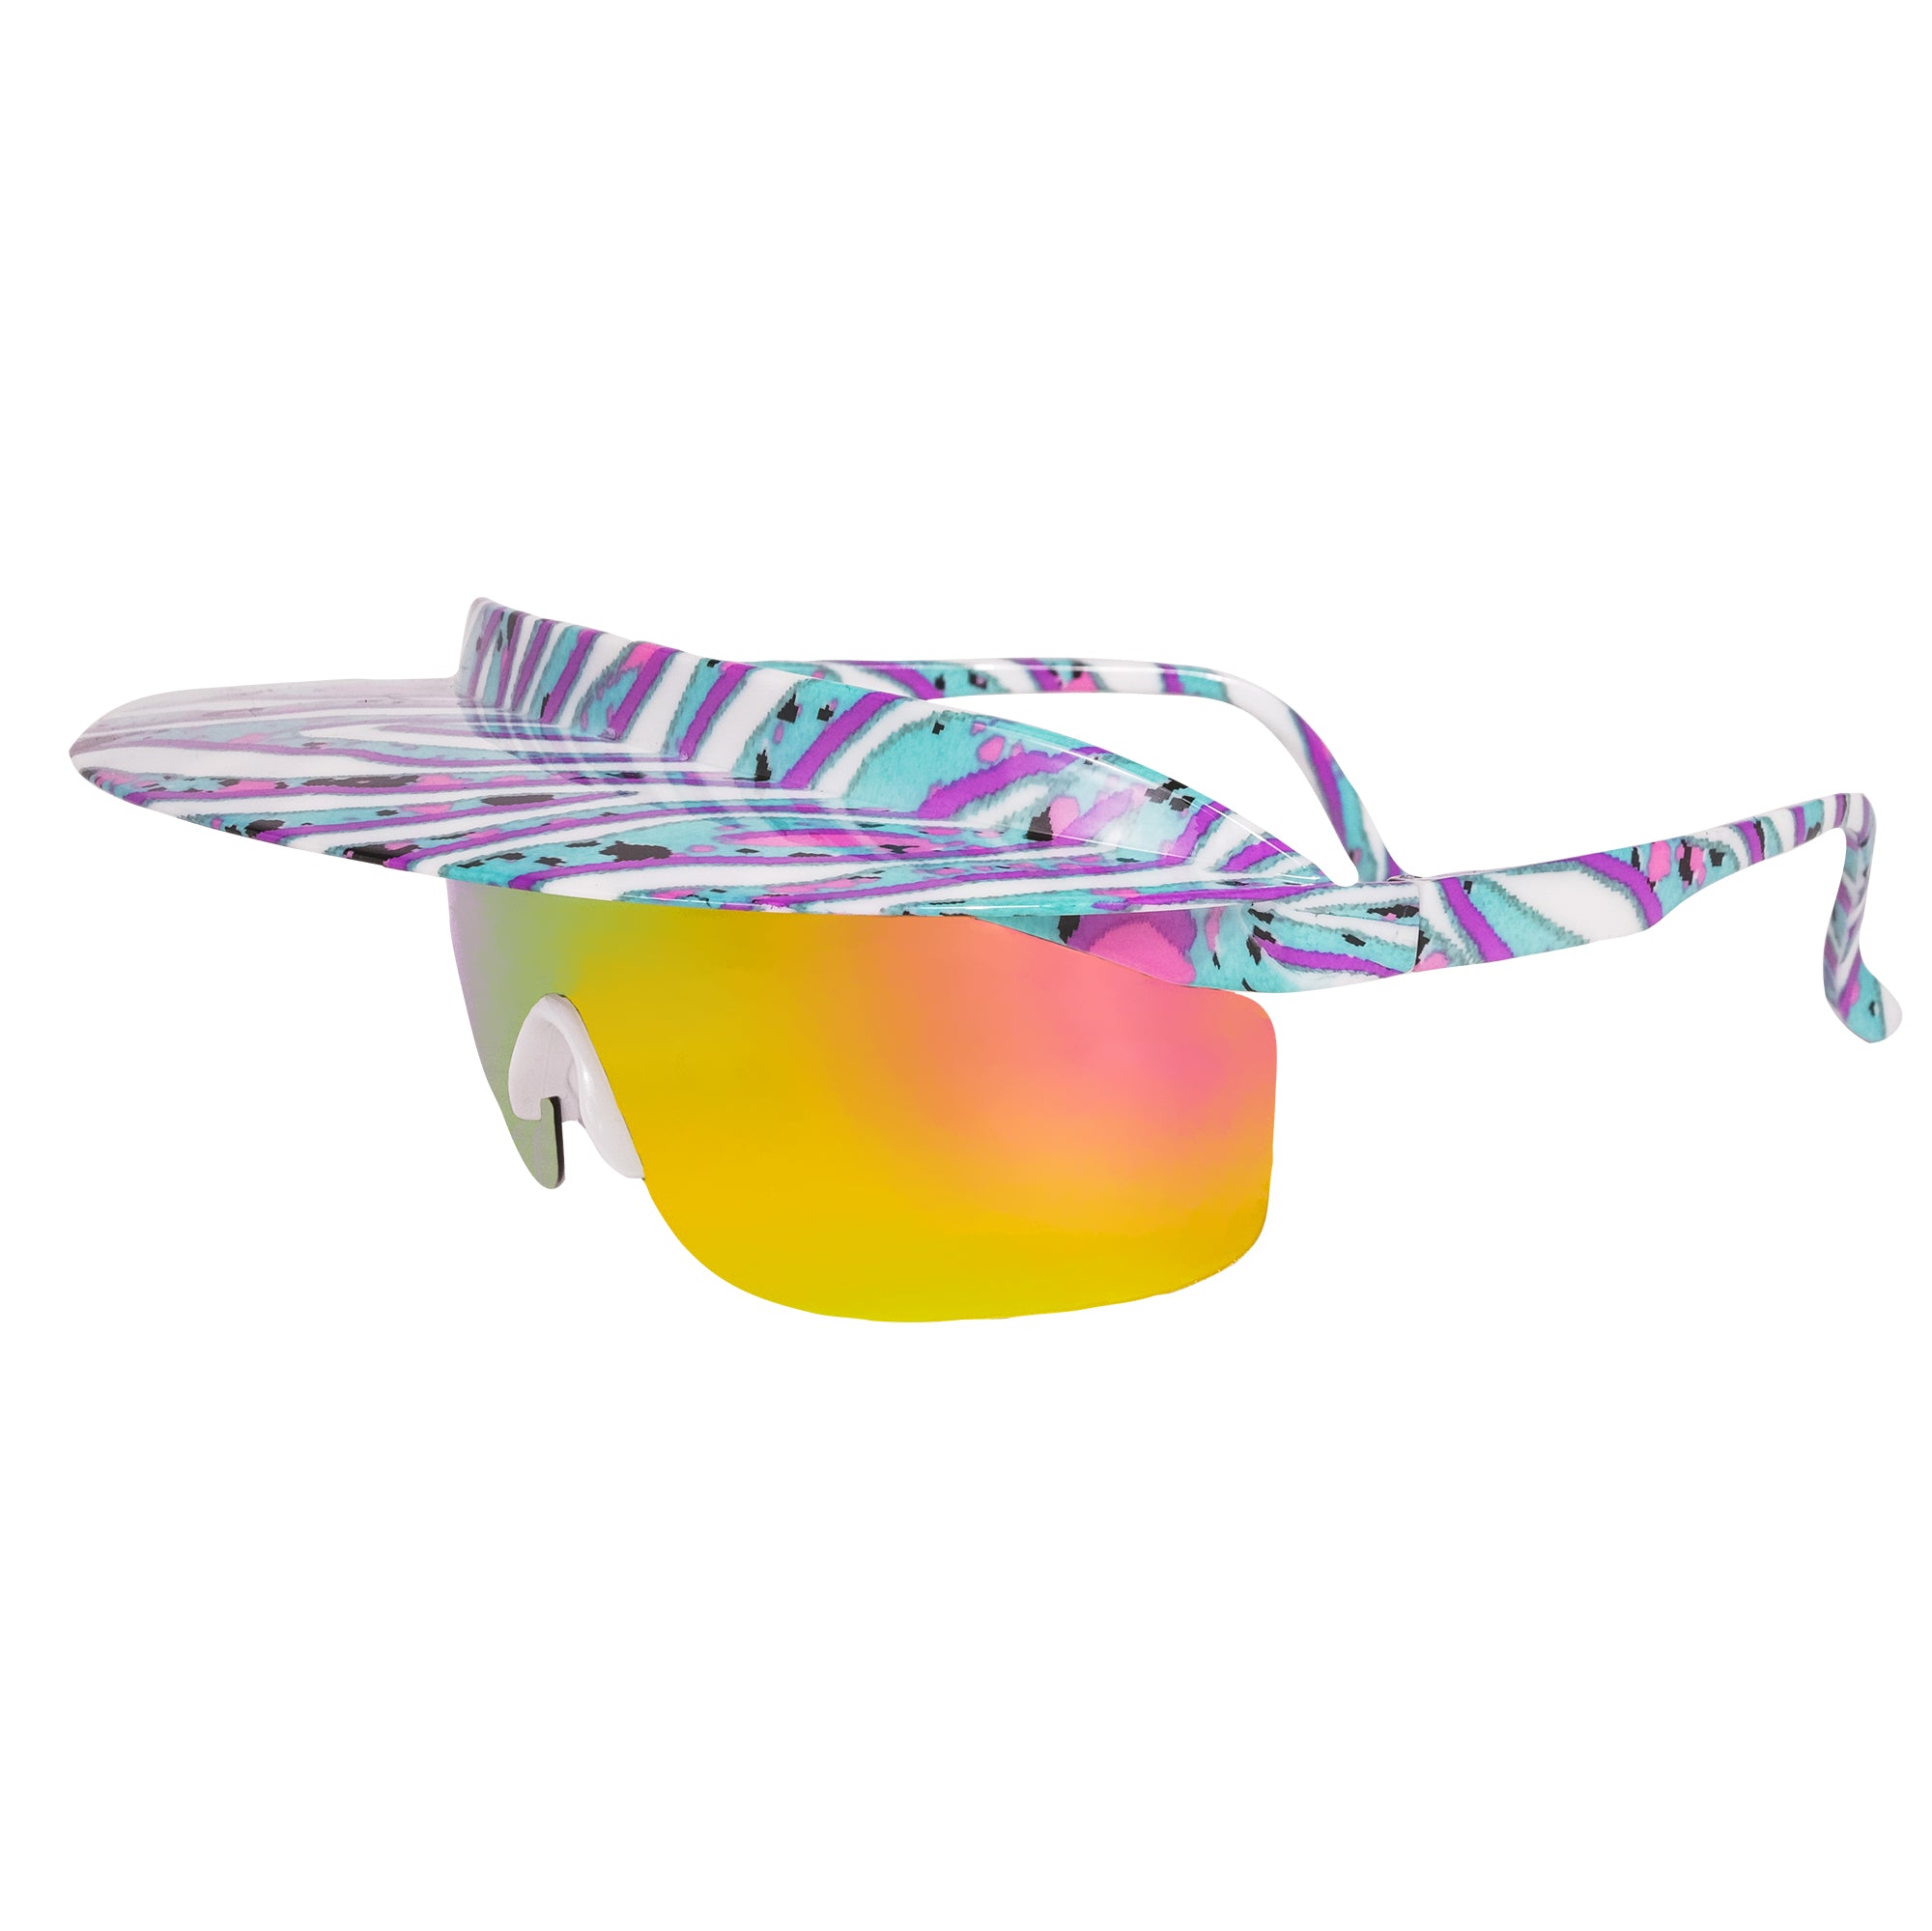 Dunkaroo 80s visor retro visor shade ski sunglasses. Pink blue white vintage retro 90s inspired ski visor sunglasses. Polarized UV400 shades retro. B Fresh Gear